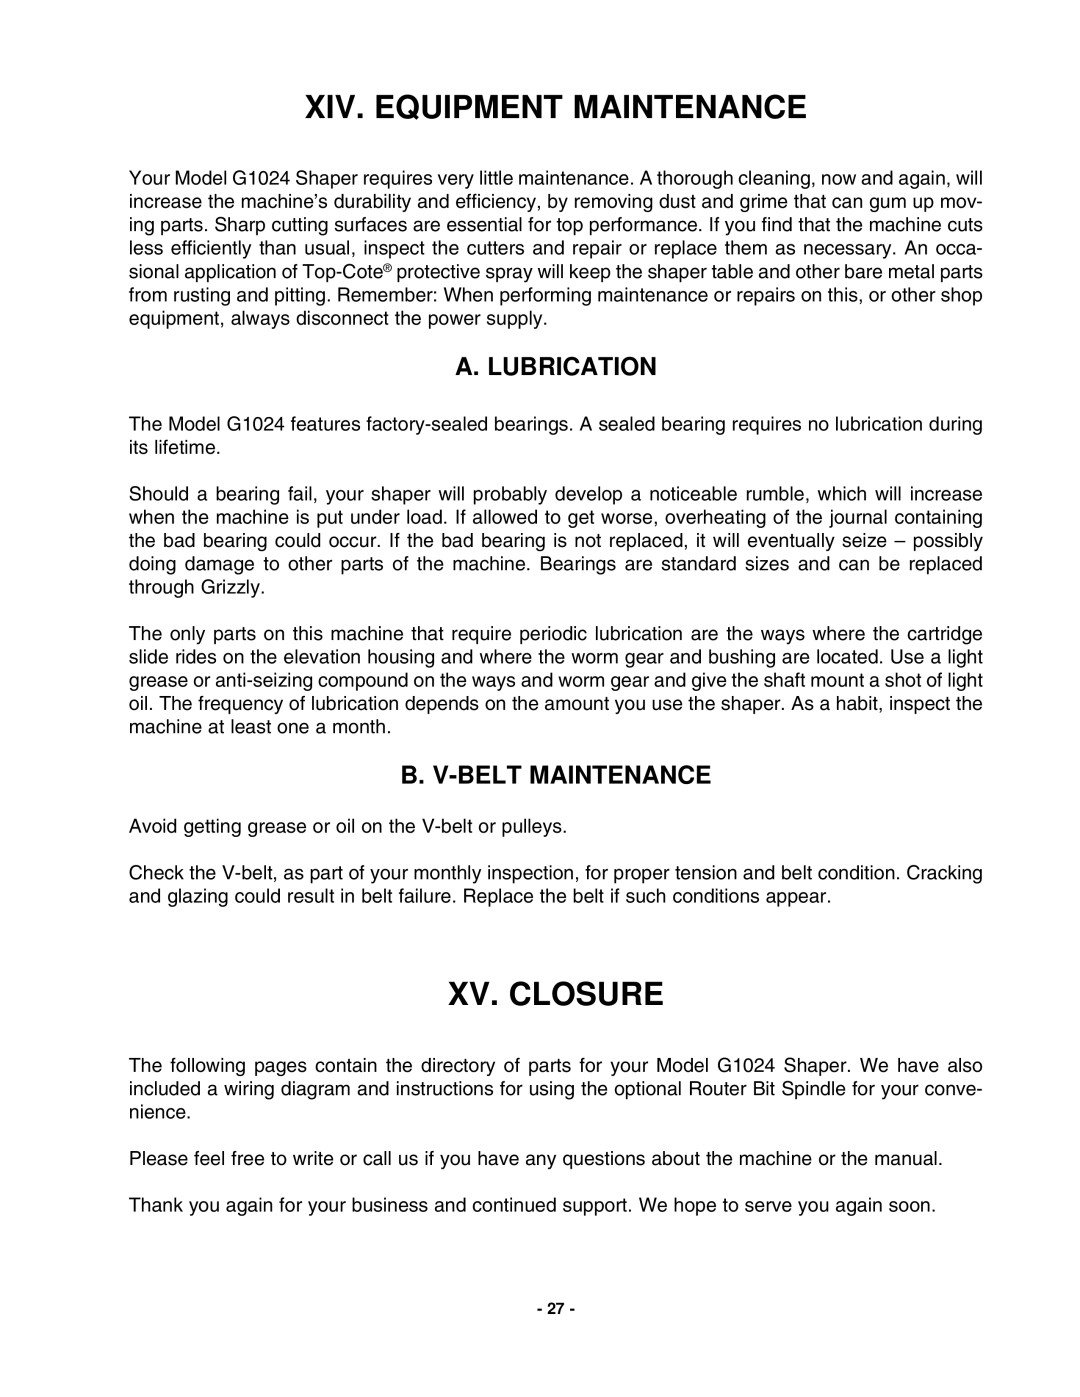 Grizzly G1024 instruction manual Xiv. Equipment Maintenance, Xv. Closure, A. Lubrication, B. V-Beltmaintenance 